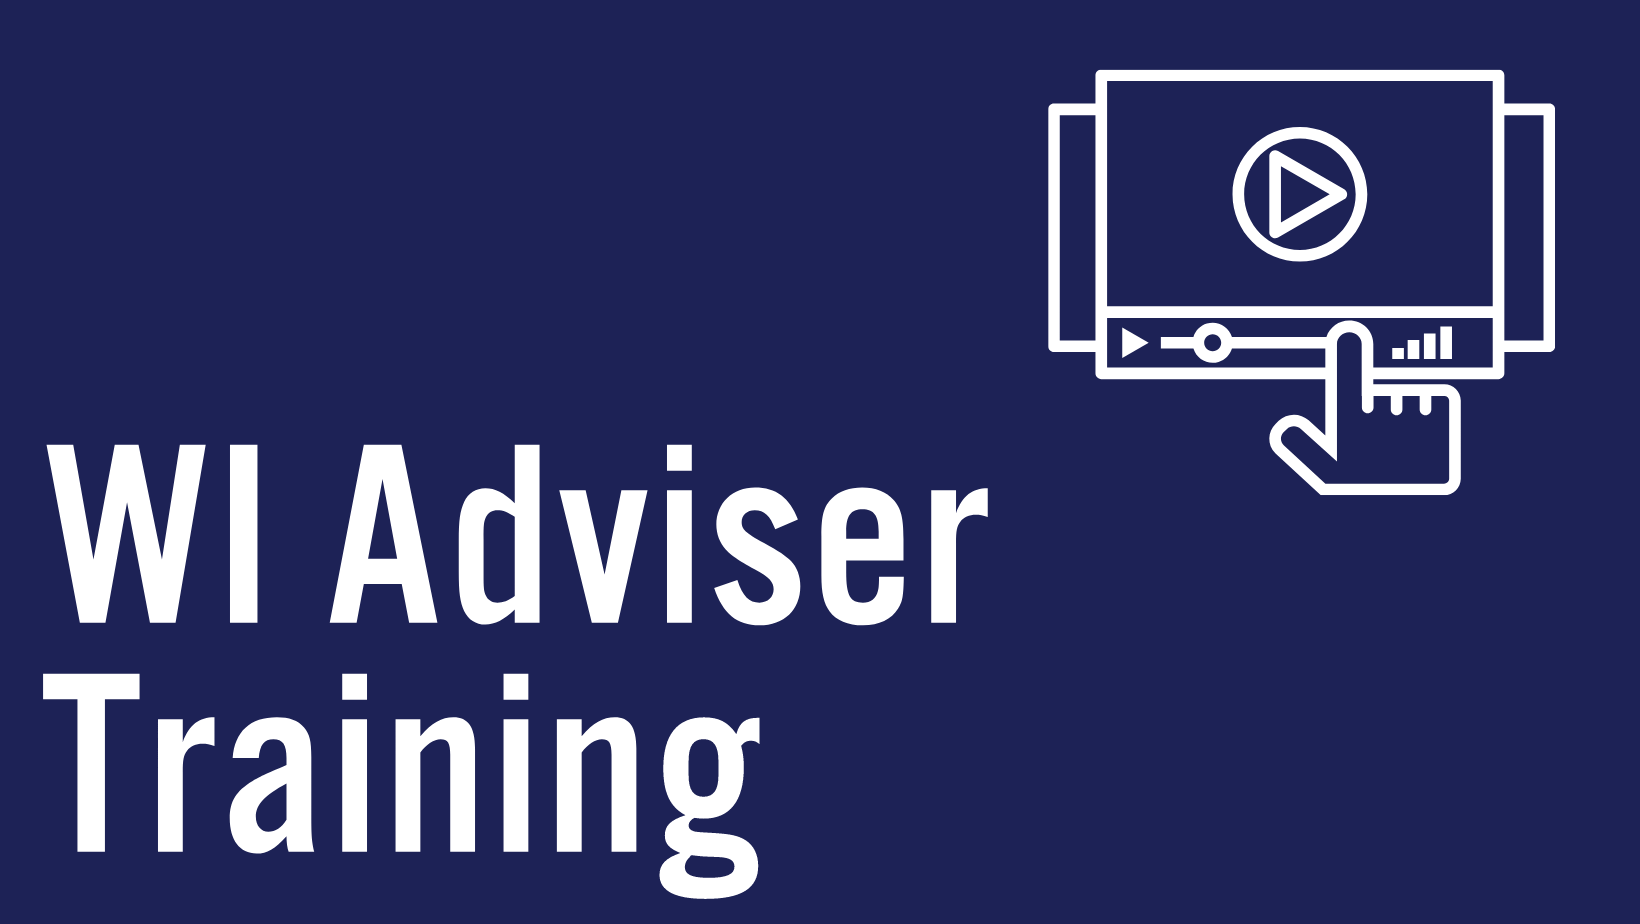 WI Adviser Training - Carousel